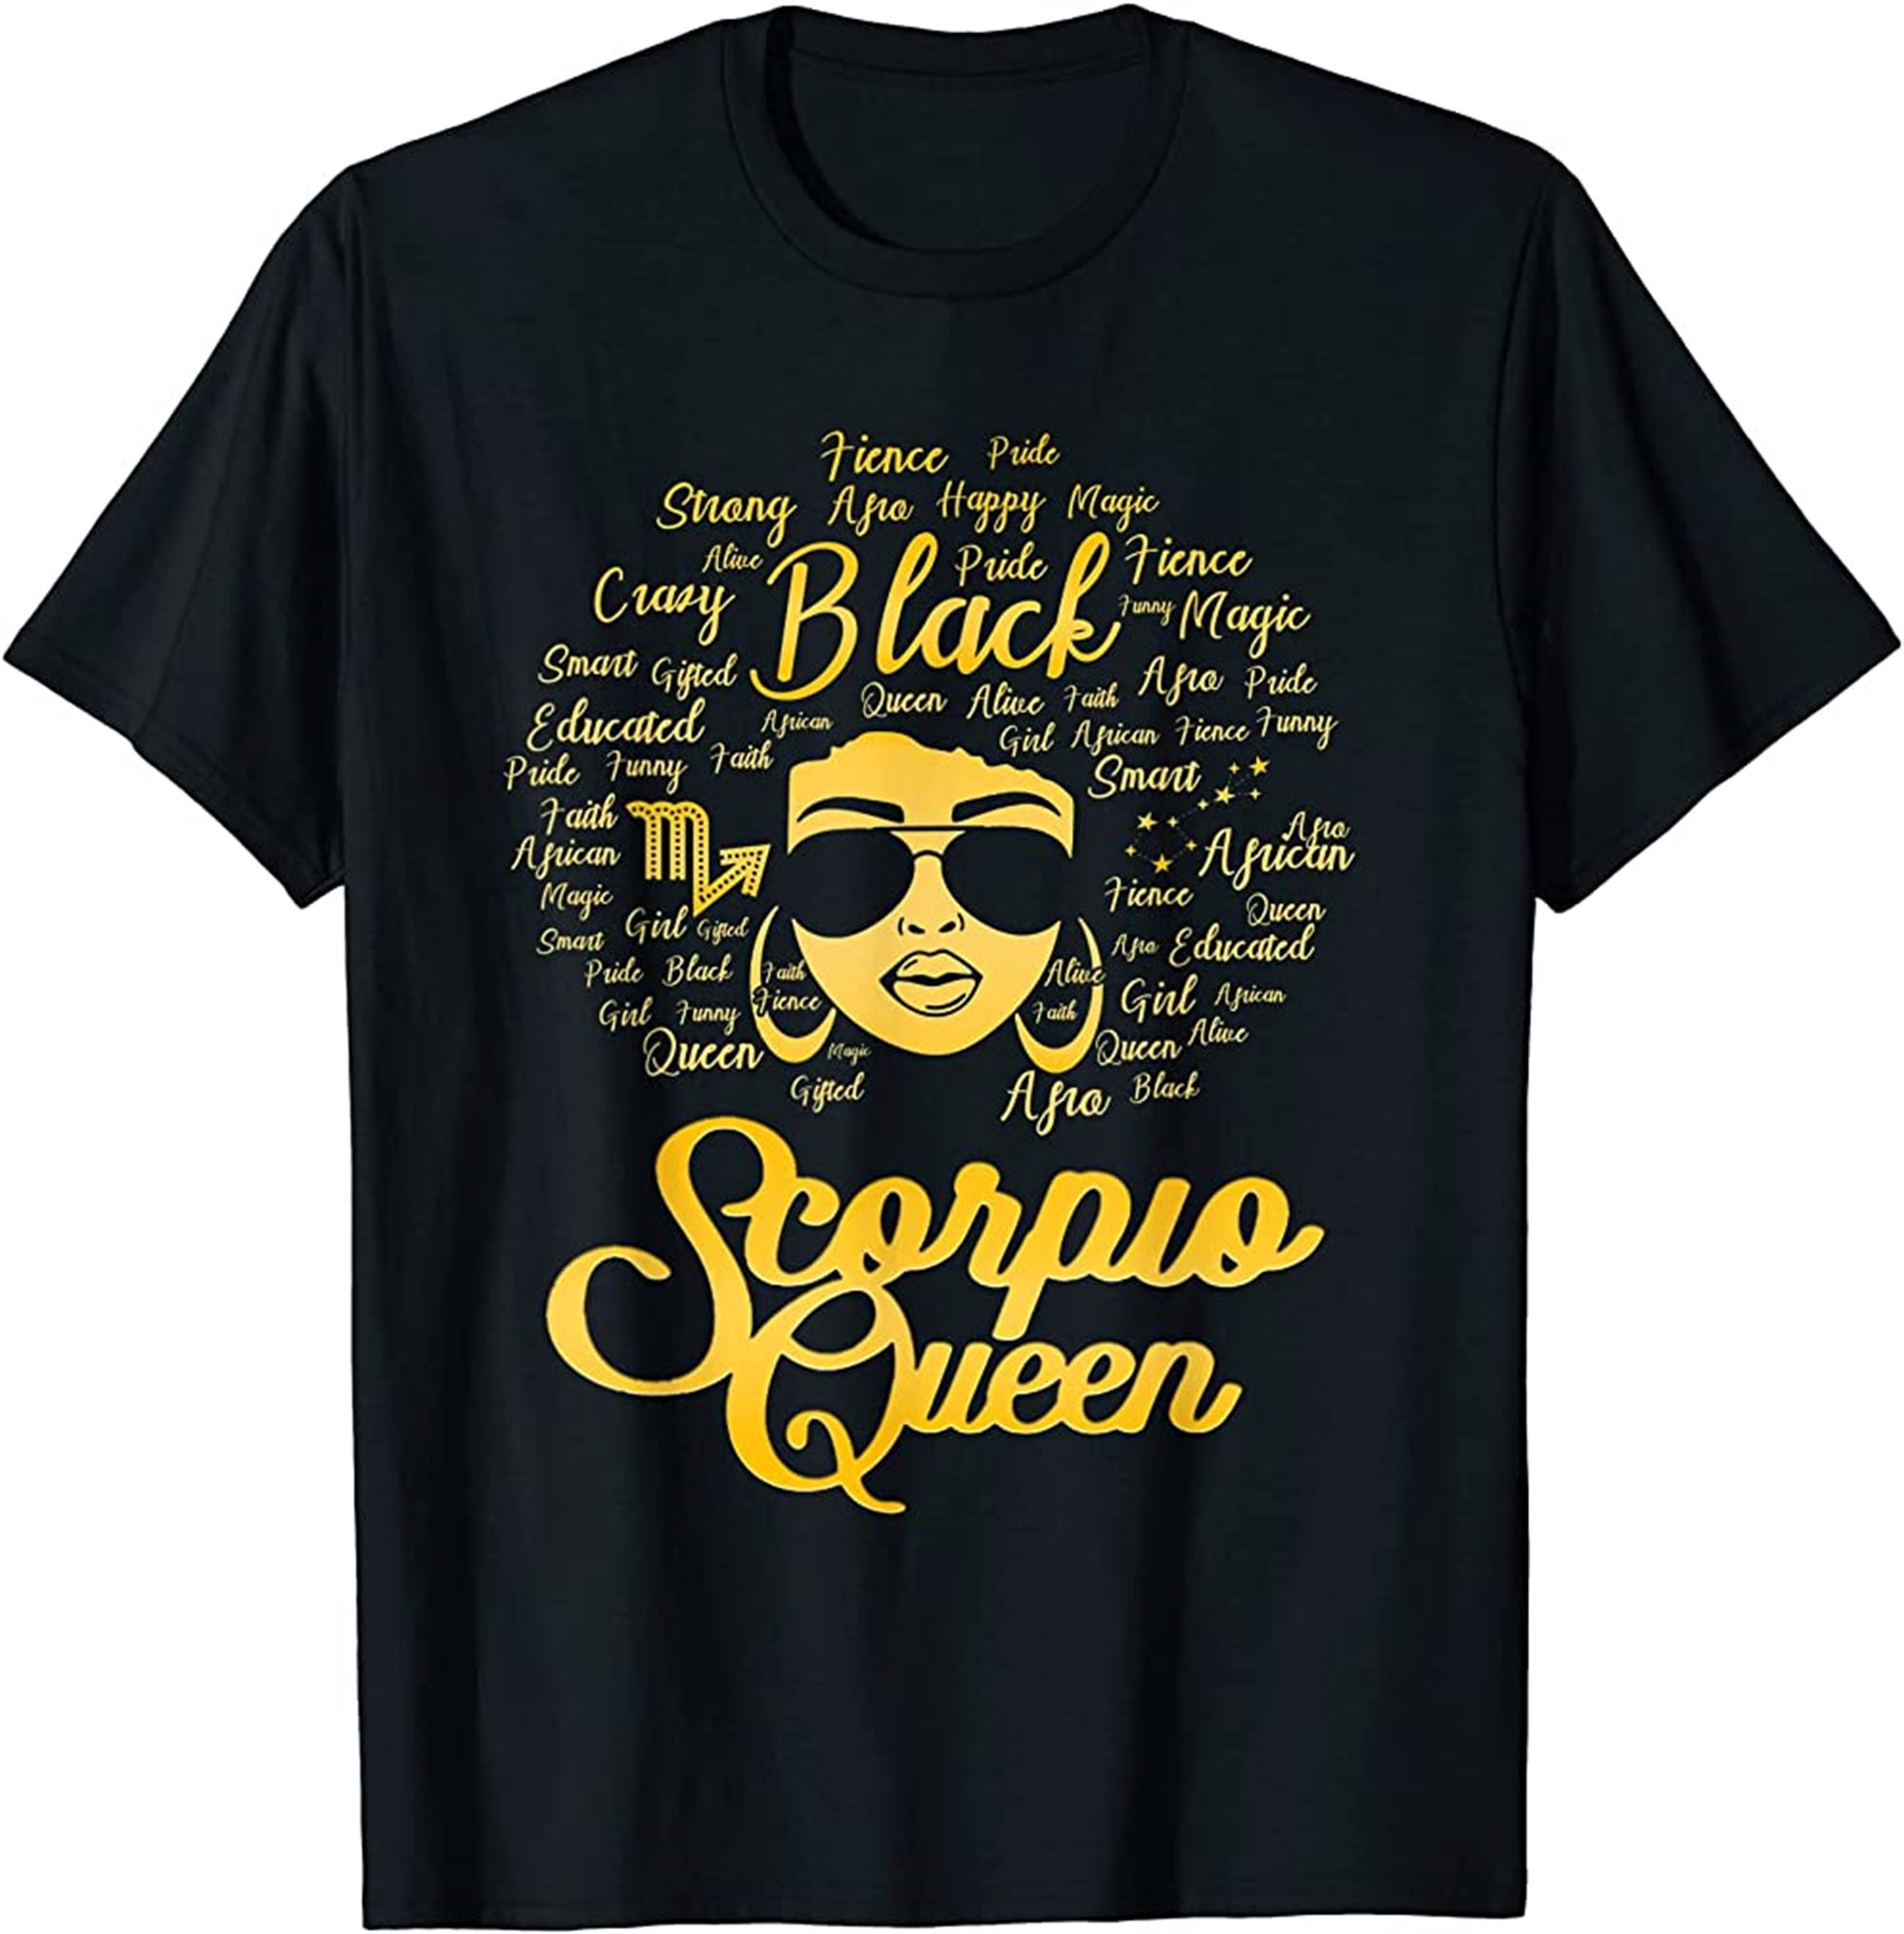 Scorpio Queen Birthday Blackwomen Zodiac Signs Afro Hair T-shirt Full Size Up To 5xl